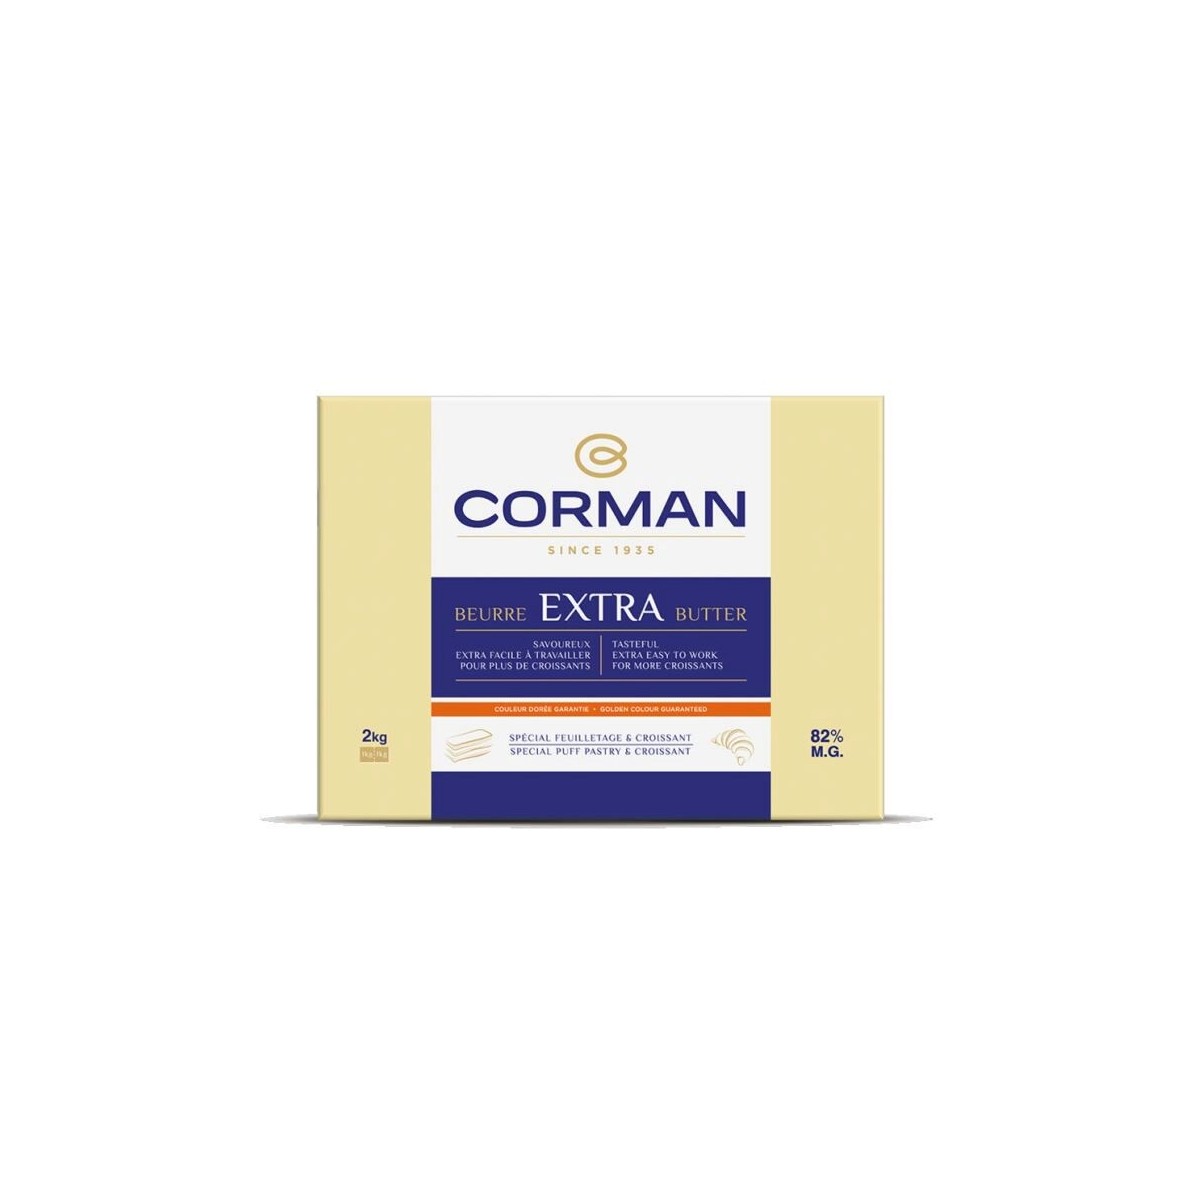 CORMAN BEURRE EXTRA 82% FEUILLETAGE & CROISSANT  CAROTENE 5 X 2KG 0029093 - 26851001